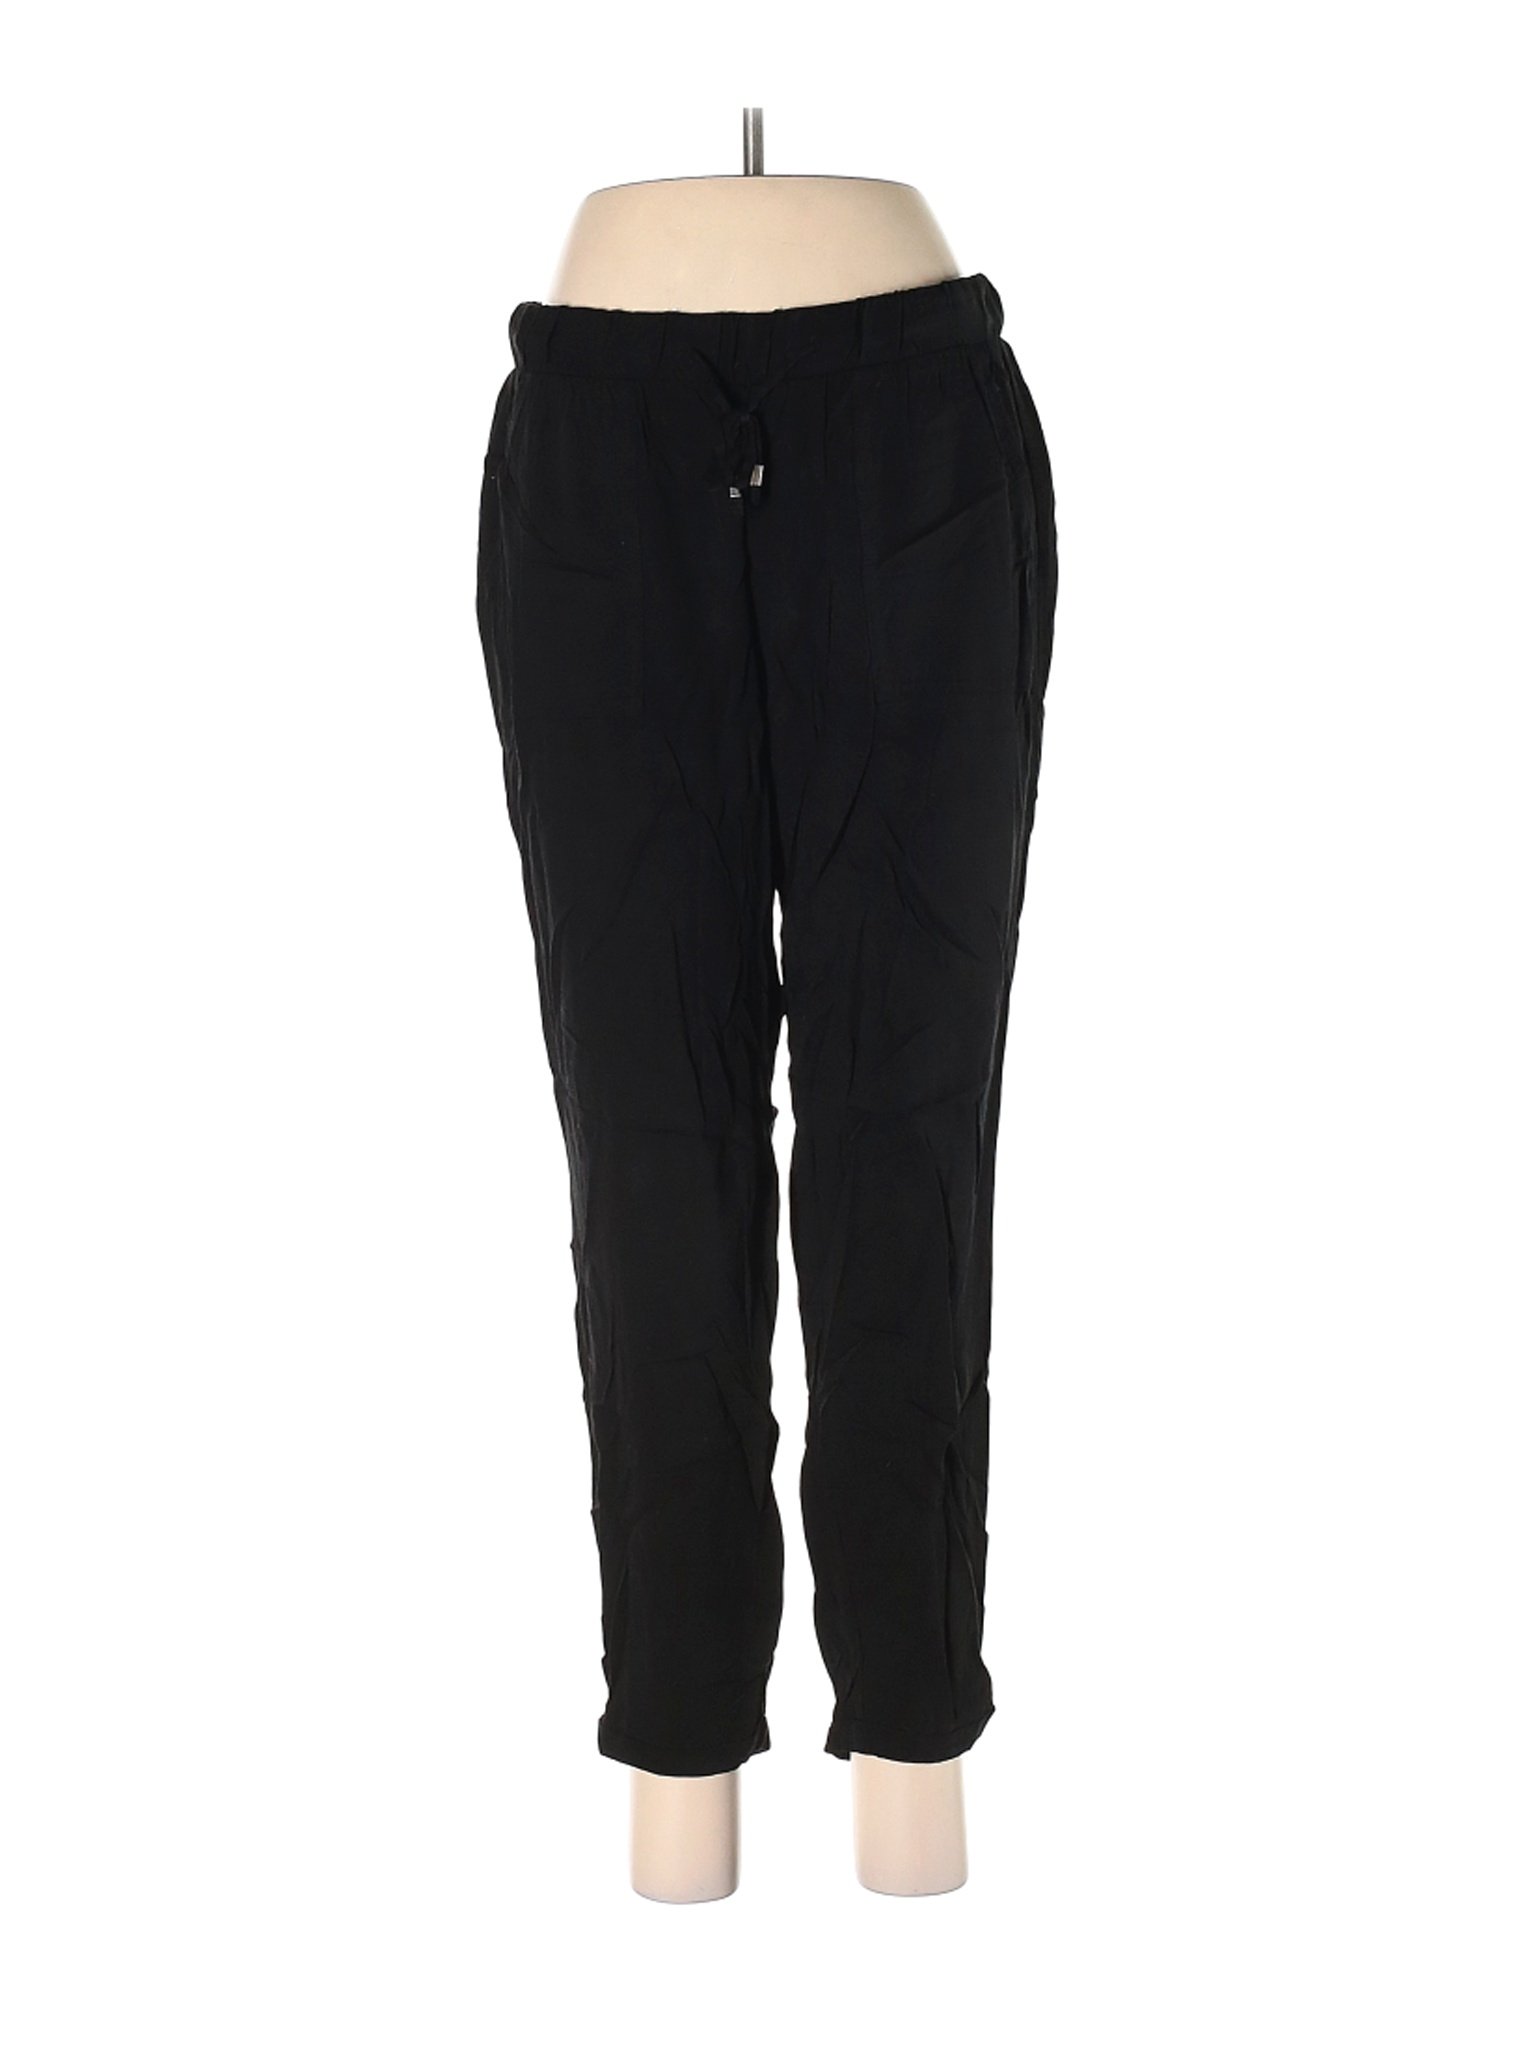 Old Navy Women Black Casual Pants M | eBay